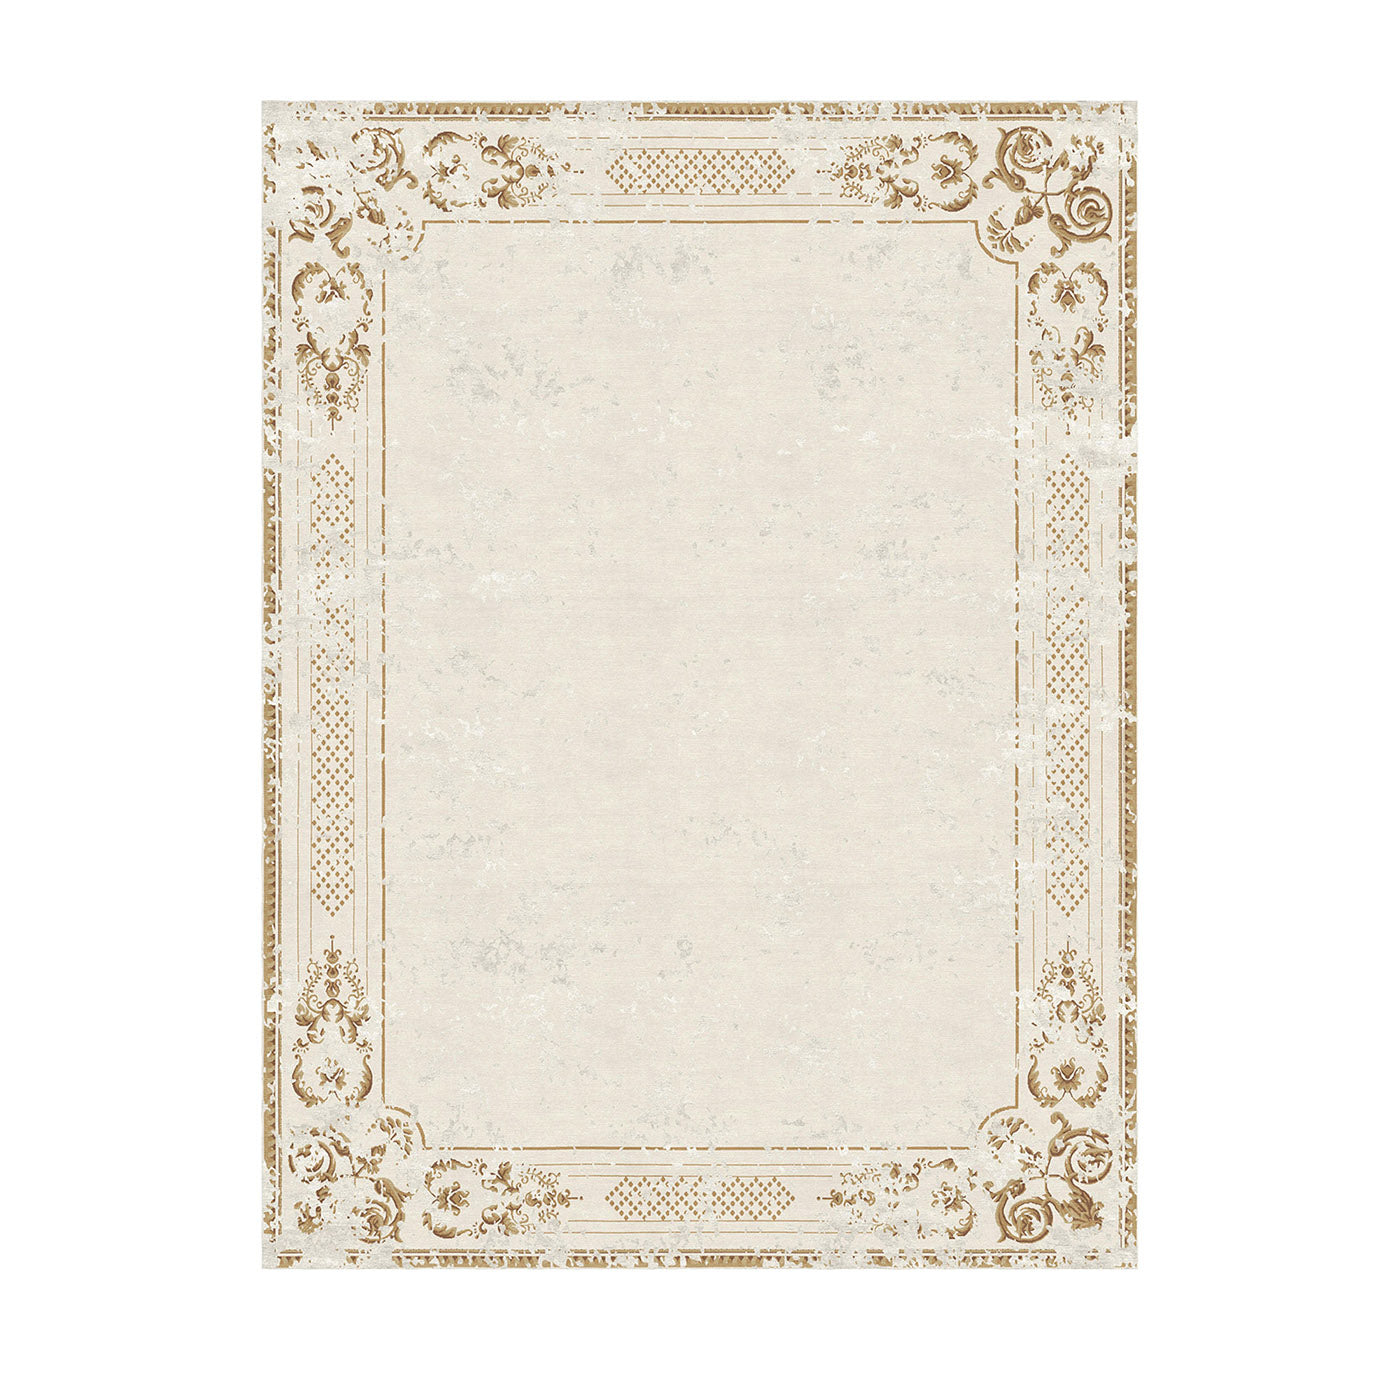 Tapis rectangulaire Ornate Stucco blanc antique - Vue principale